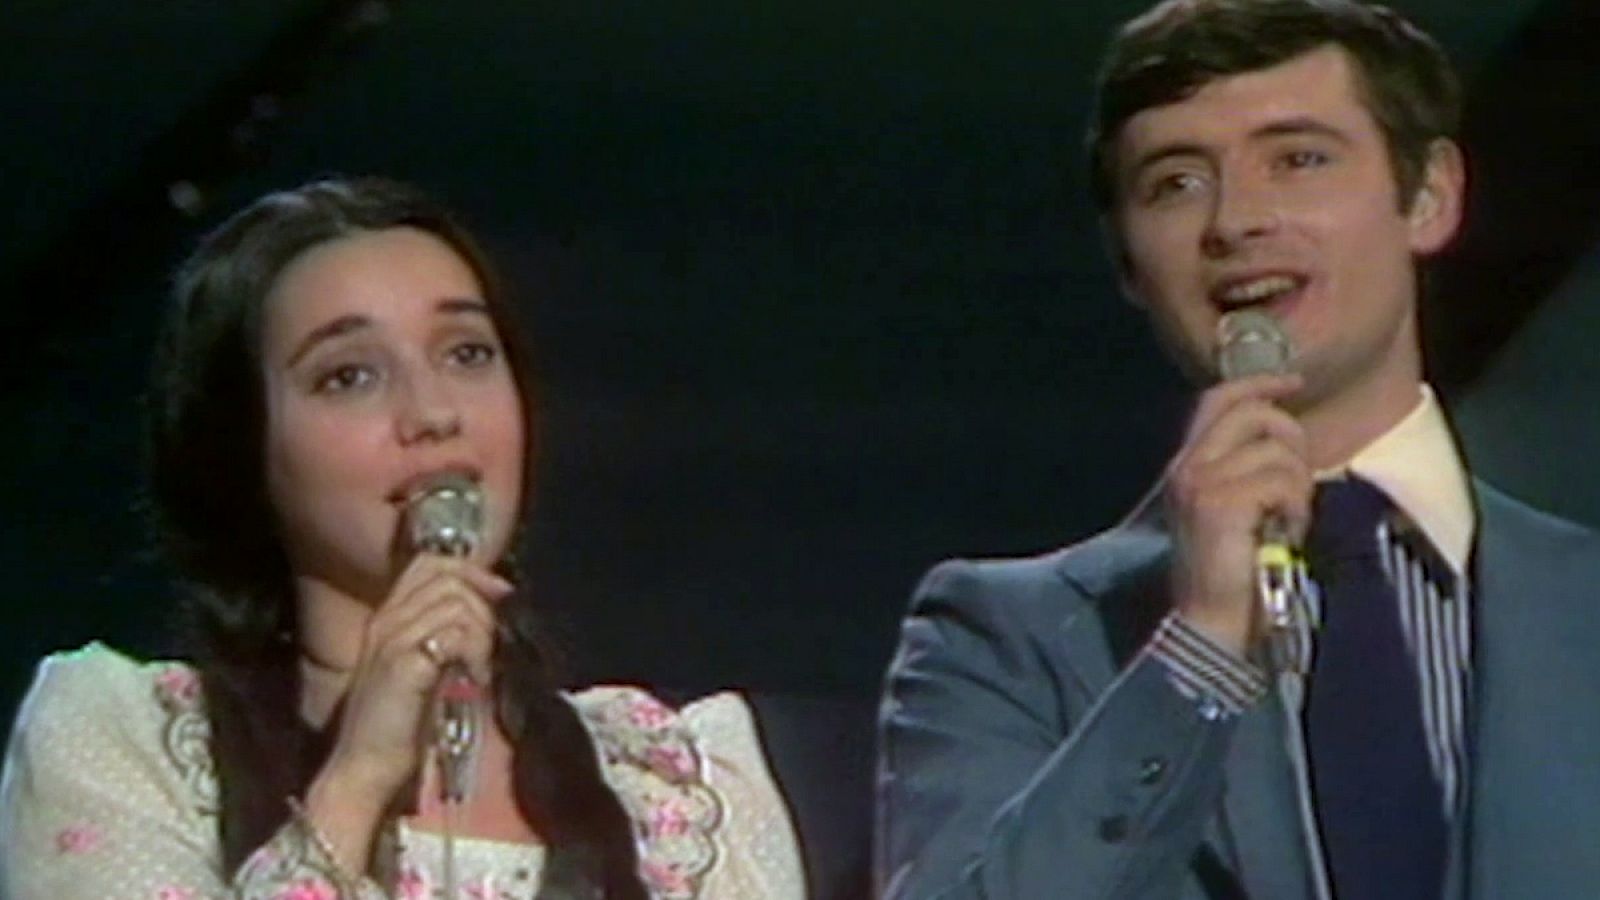 Festival de Eurovisión 1975 - Sergio y Estíbaliz cantaron "Tú volverás" 